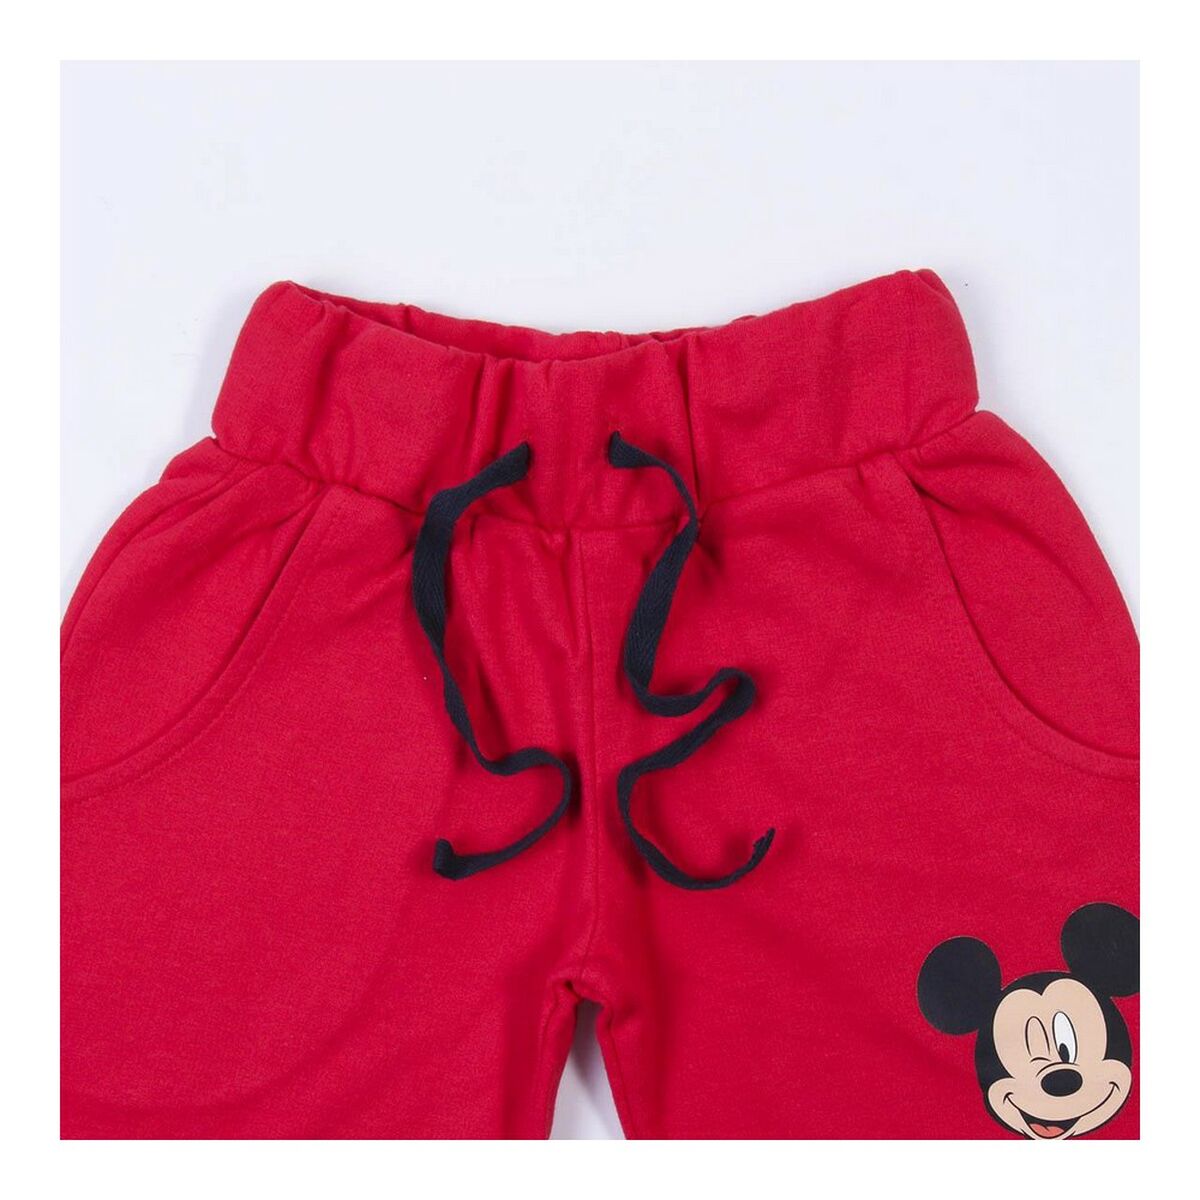 Set de lenjerie/haine Mickey Mouse Gri - Mărime 6 Ani